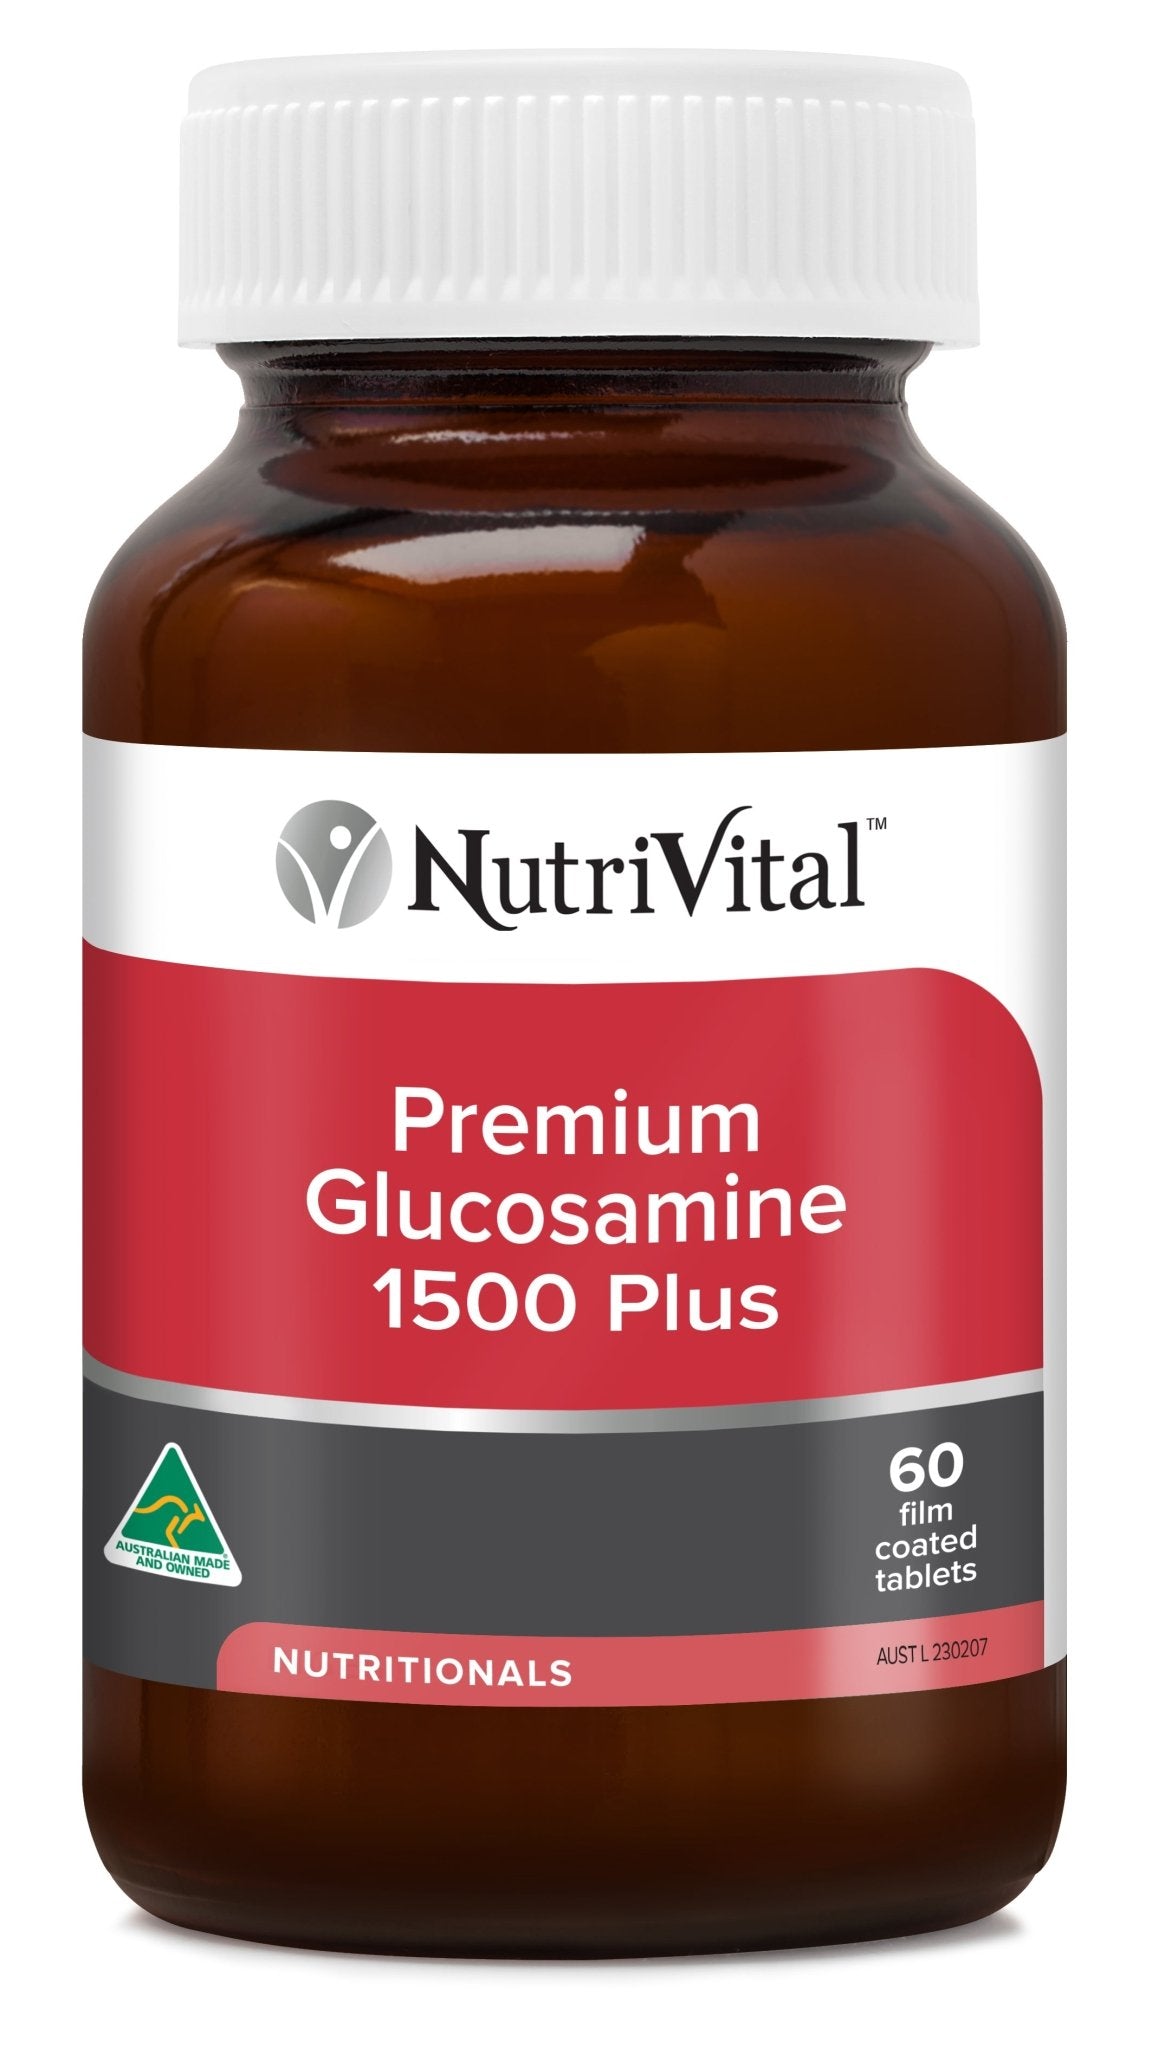 NutriVital Premium Glucosamine 1500 Plus Tablets 60 tablets - Dr Earth - Supplements, Nutrivital